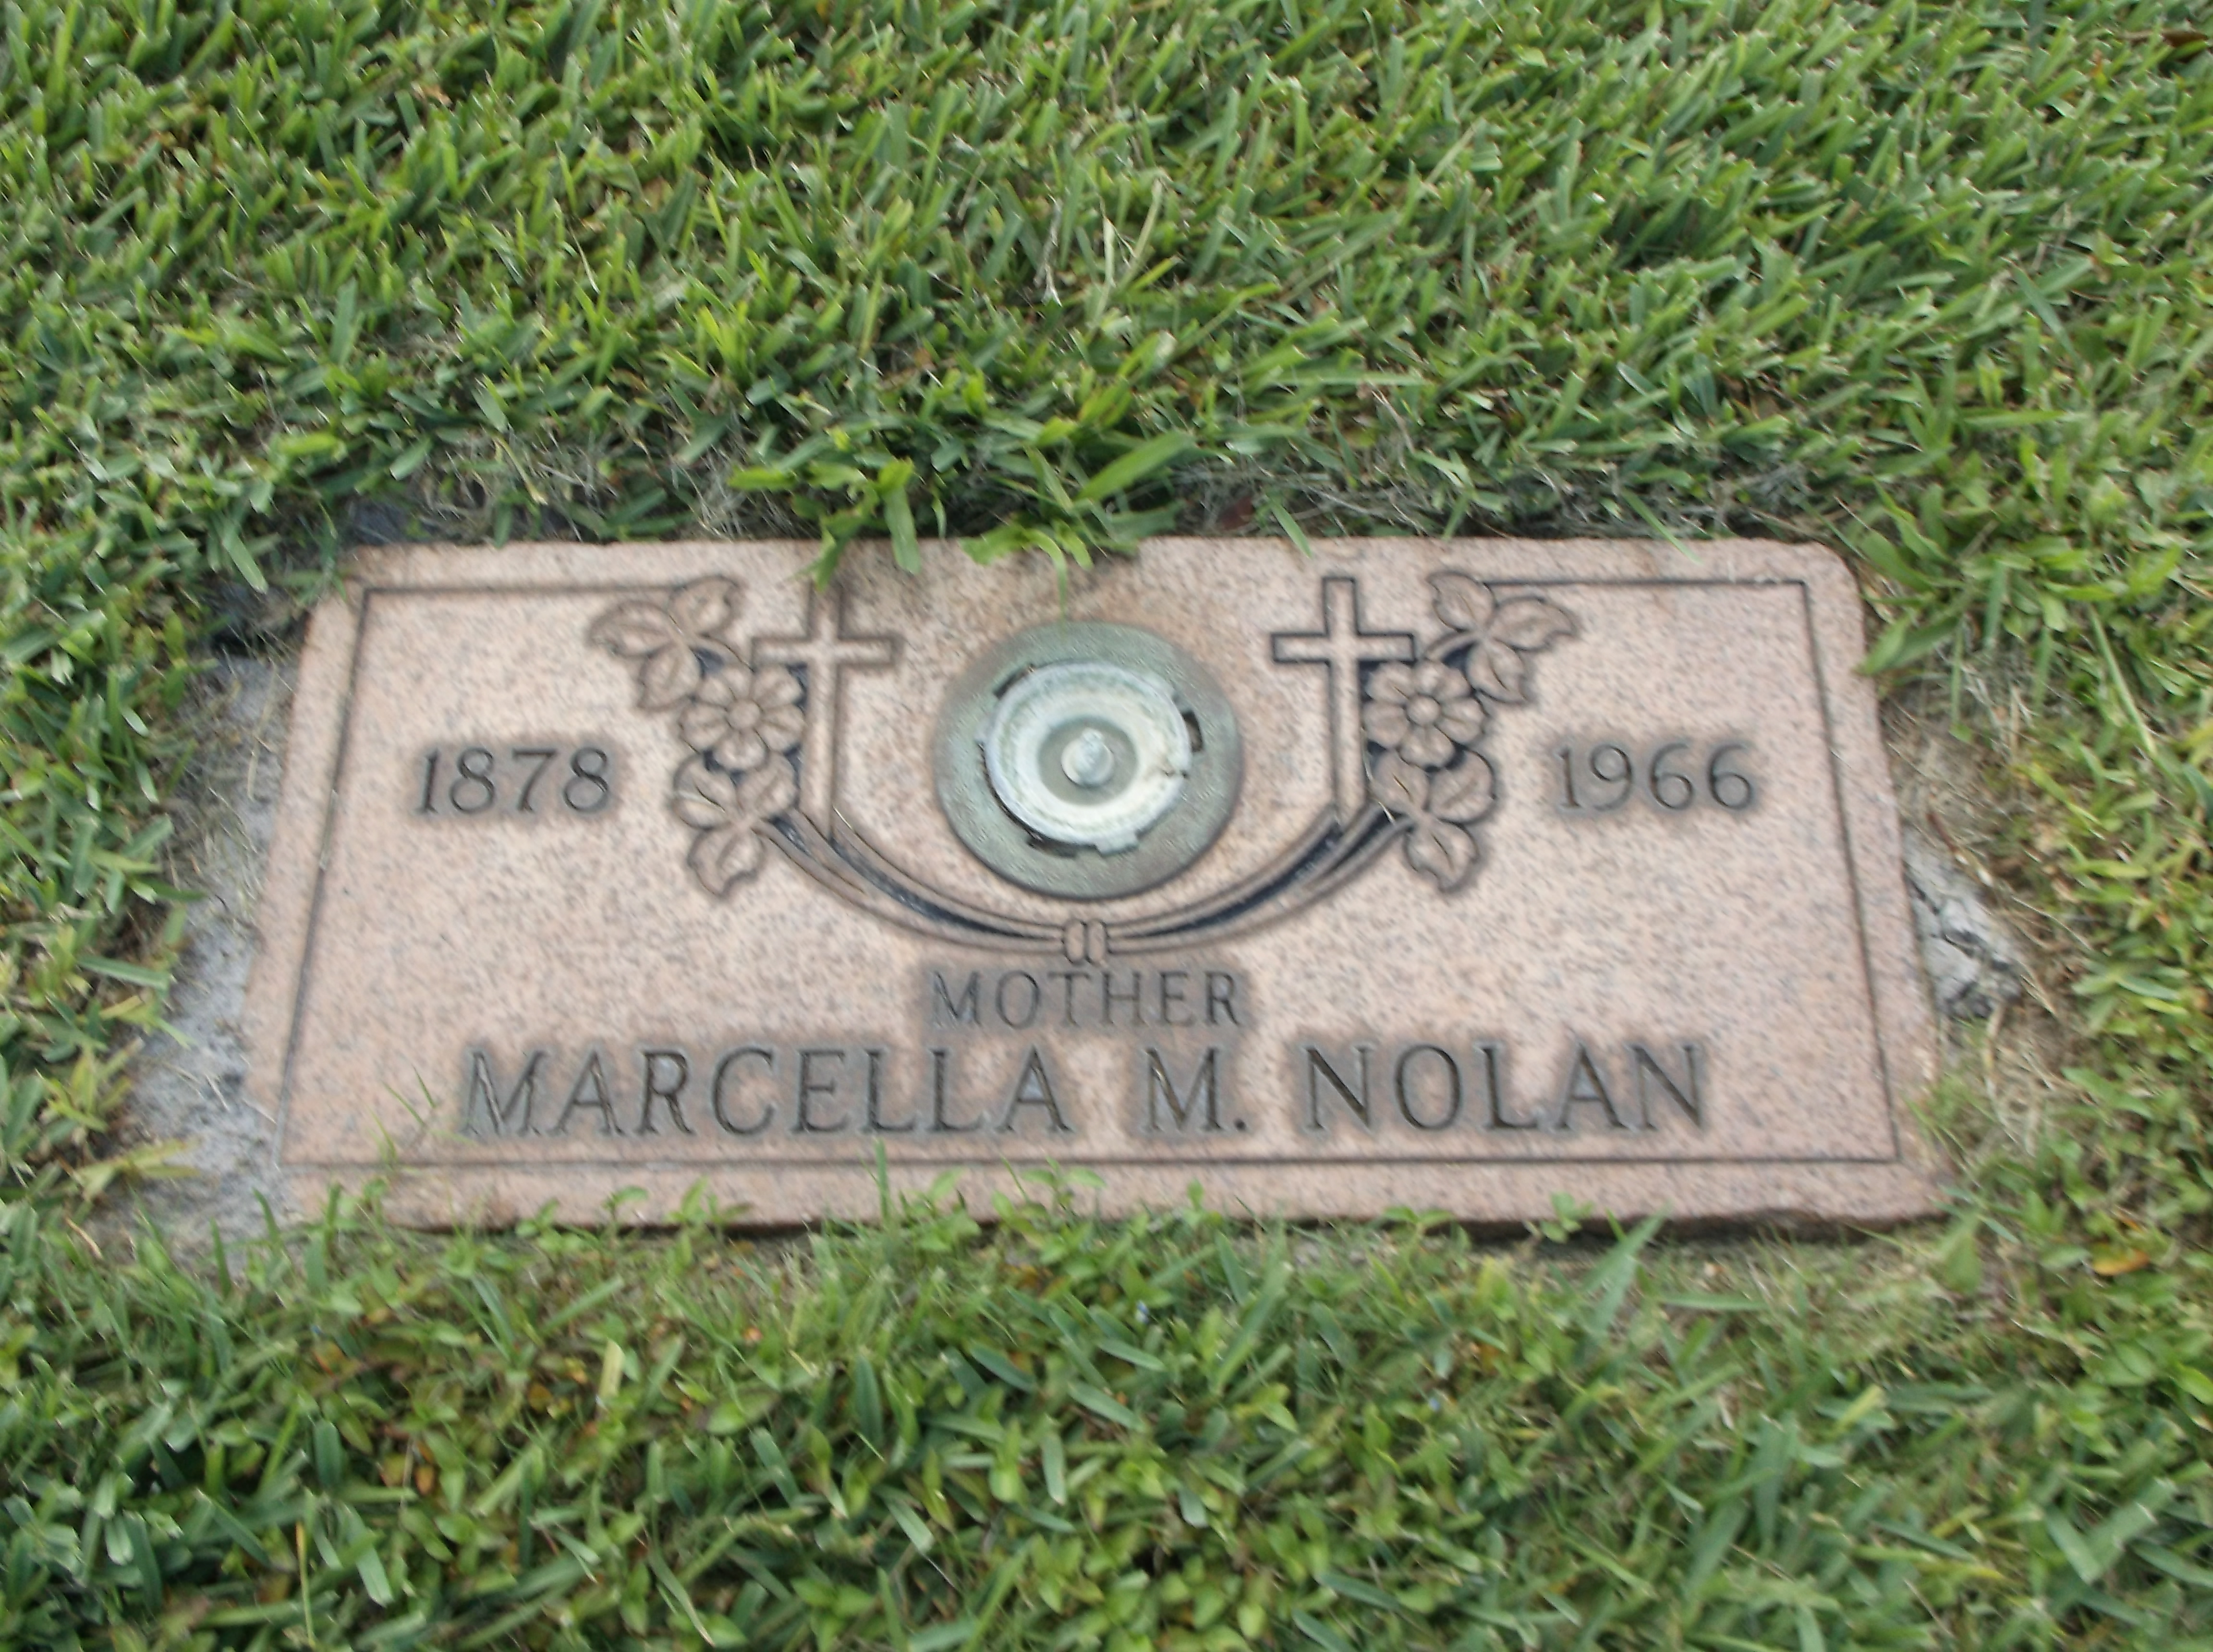 Marcella M Nolan